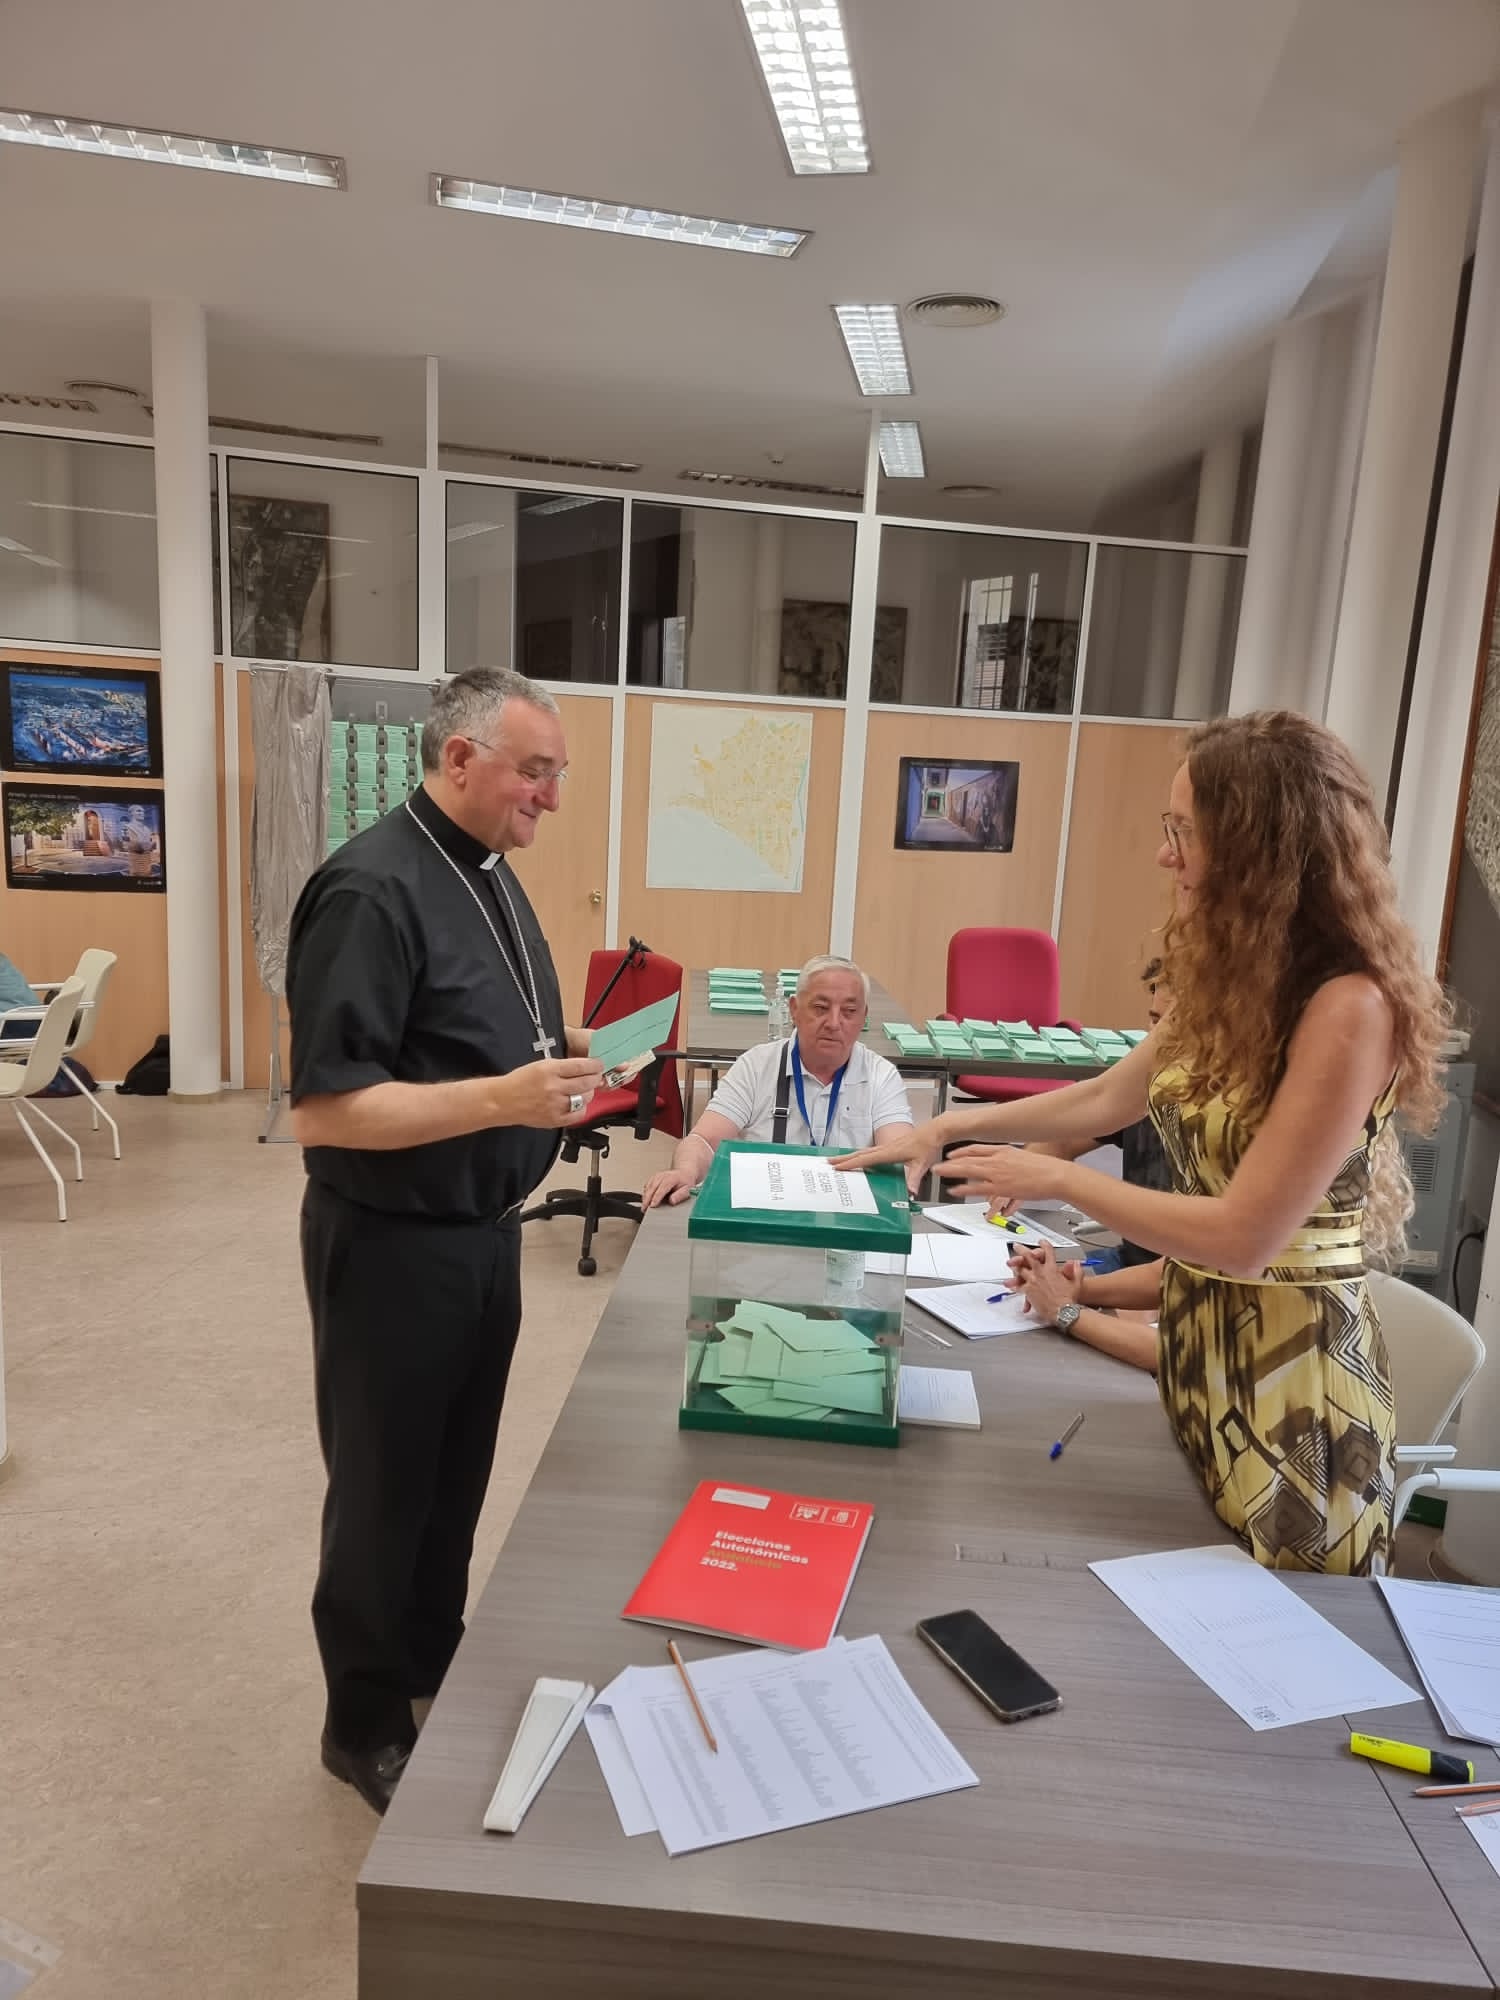 Fotos: Almería vota en plena ola de calor